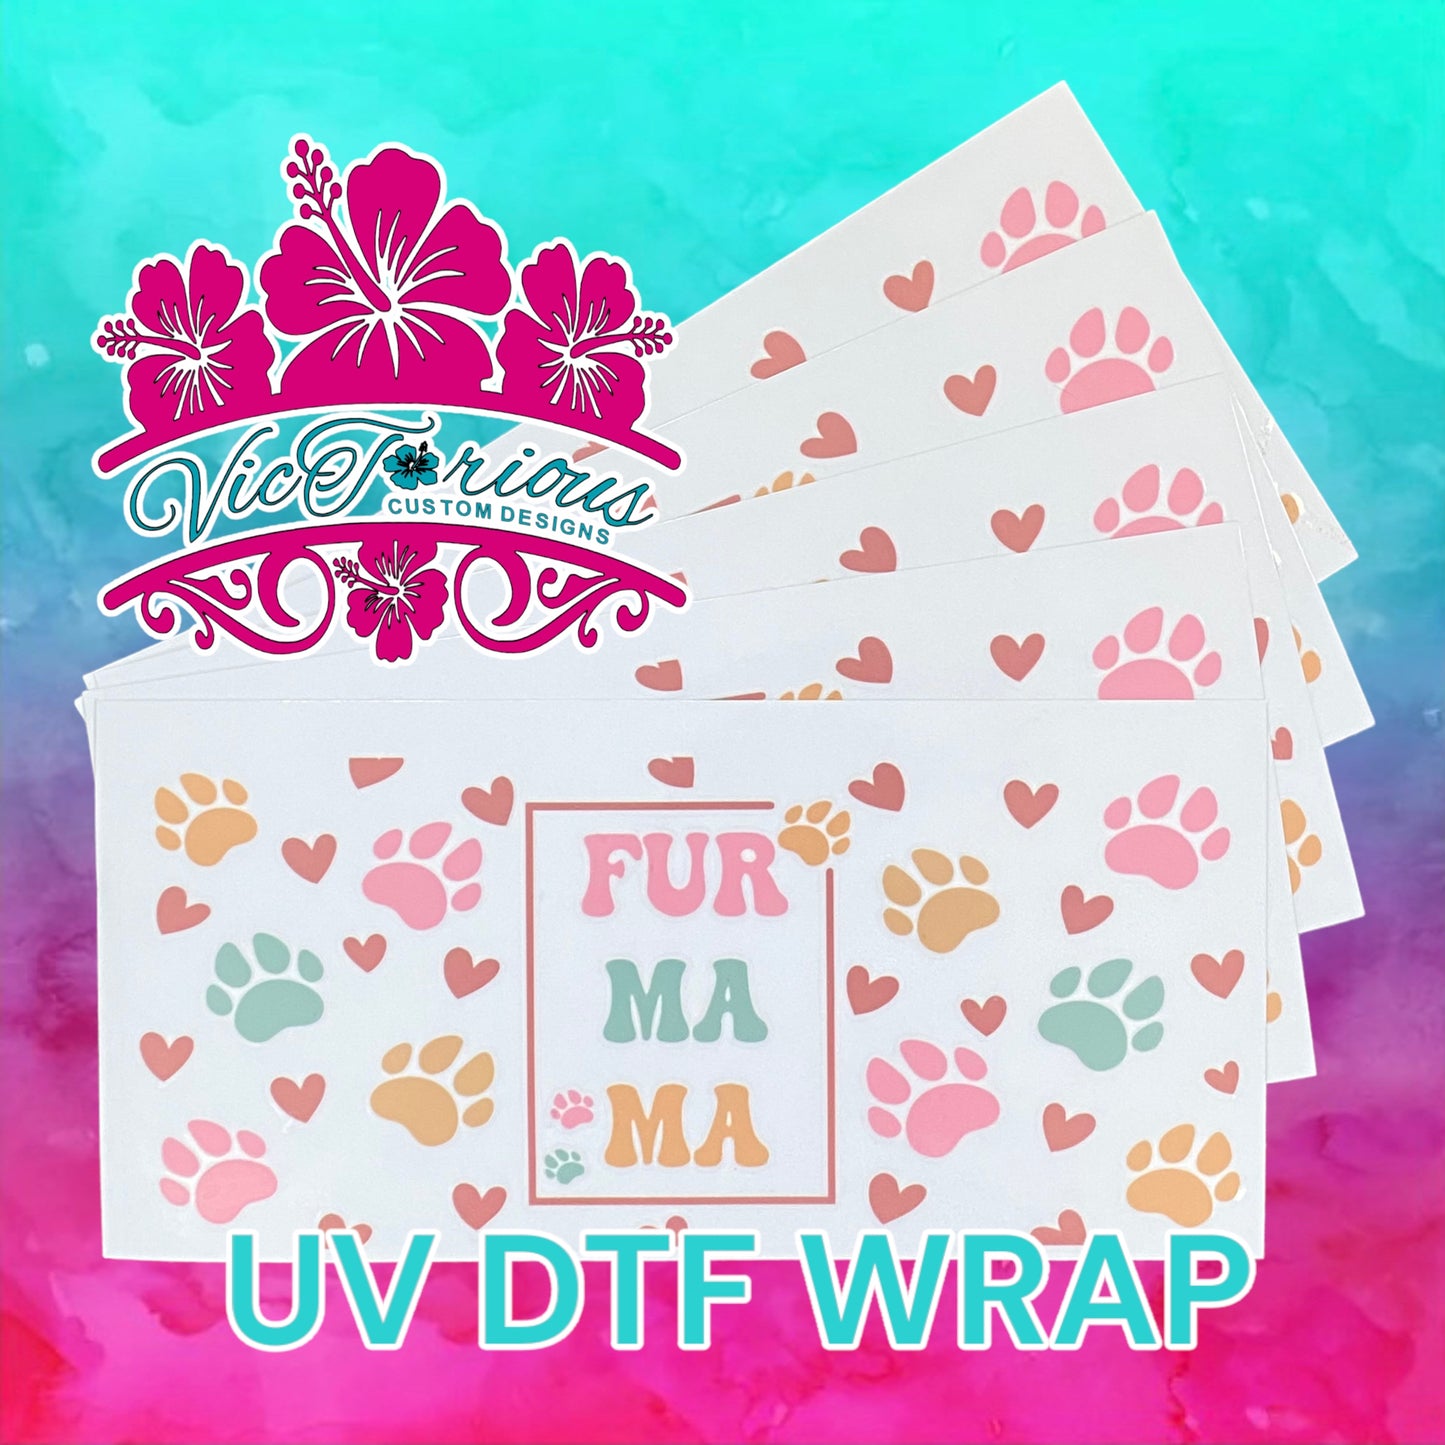 Fur Mama UV DTF Wrap